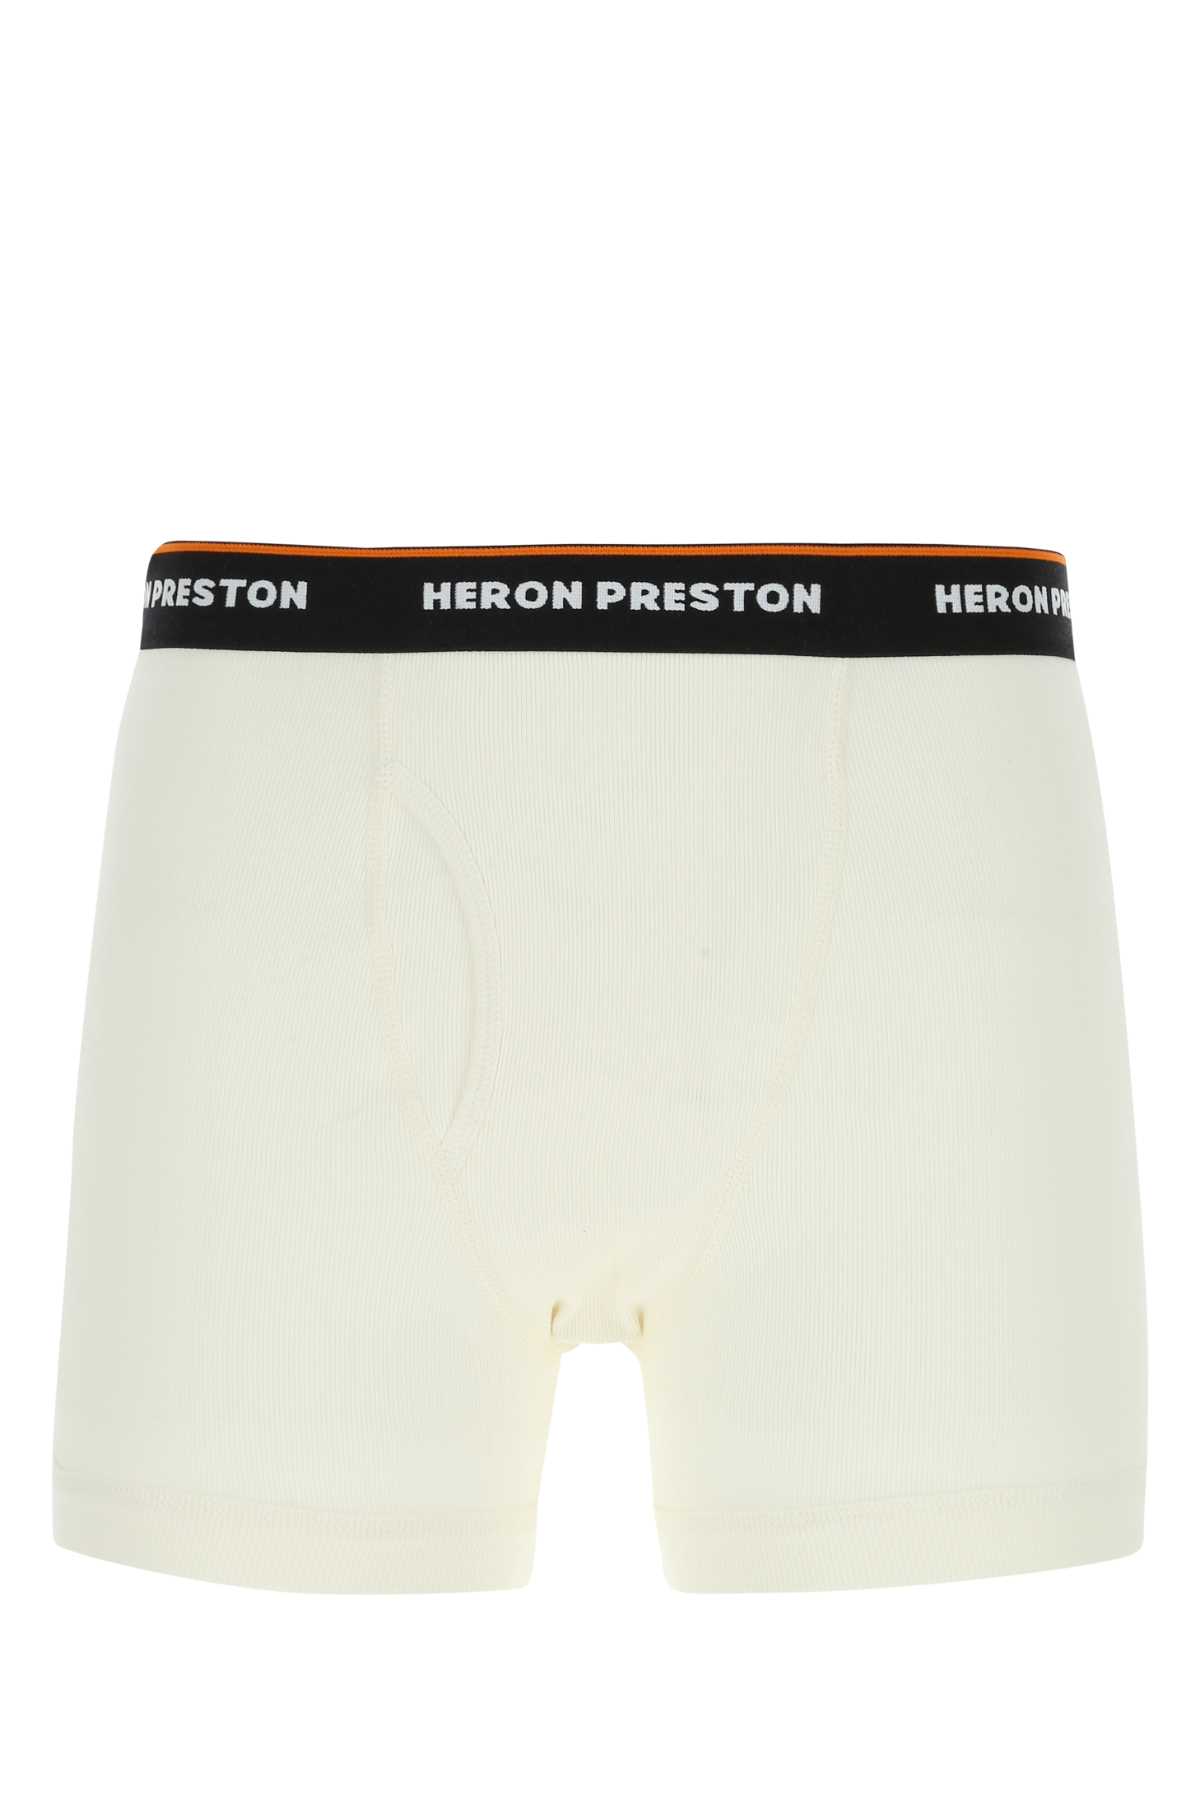 HERON PRESTON Ivory Stretch Cotton Boxer Set